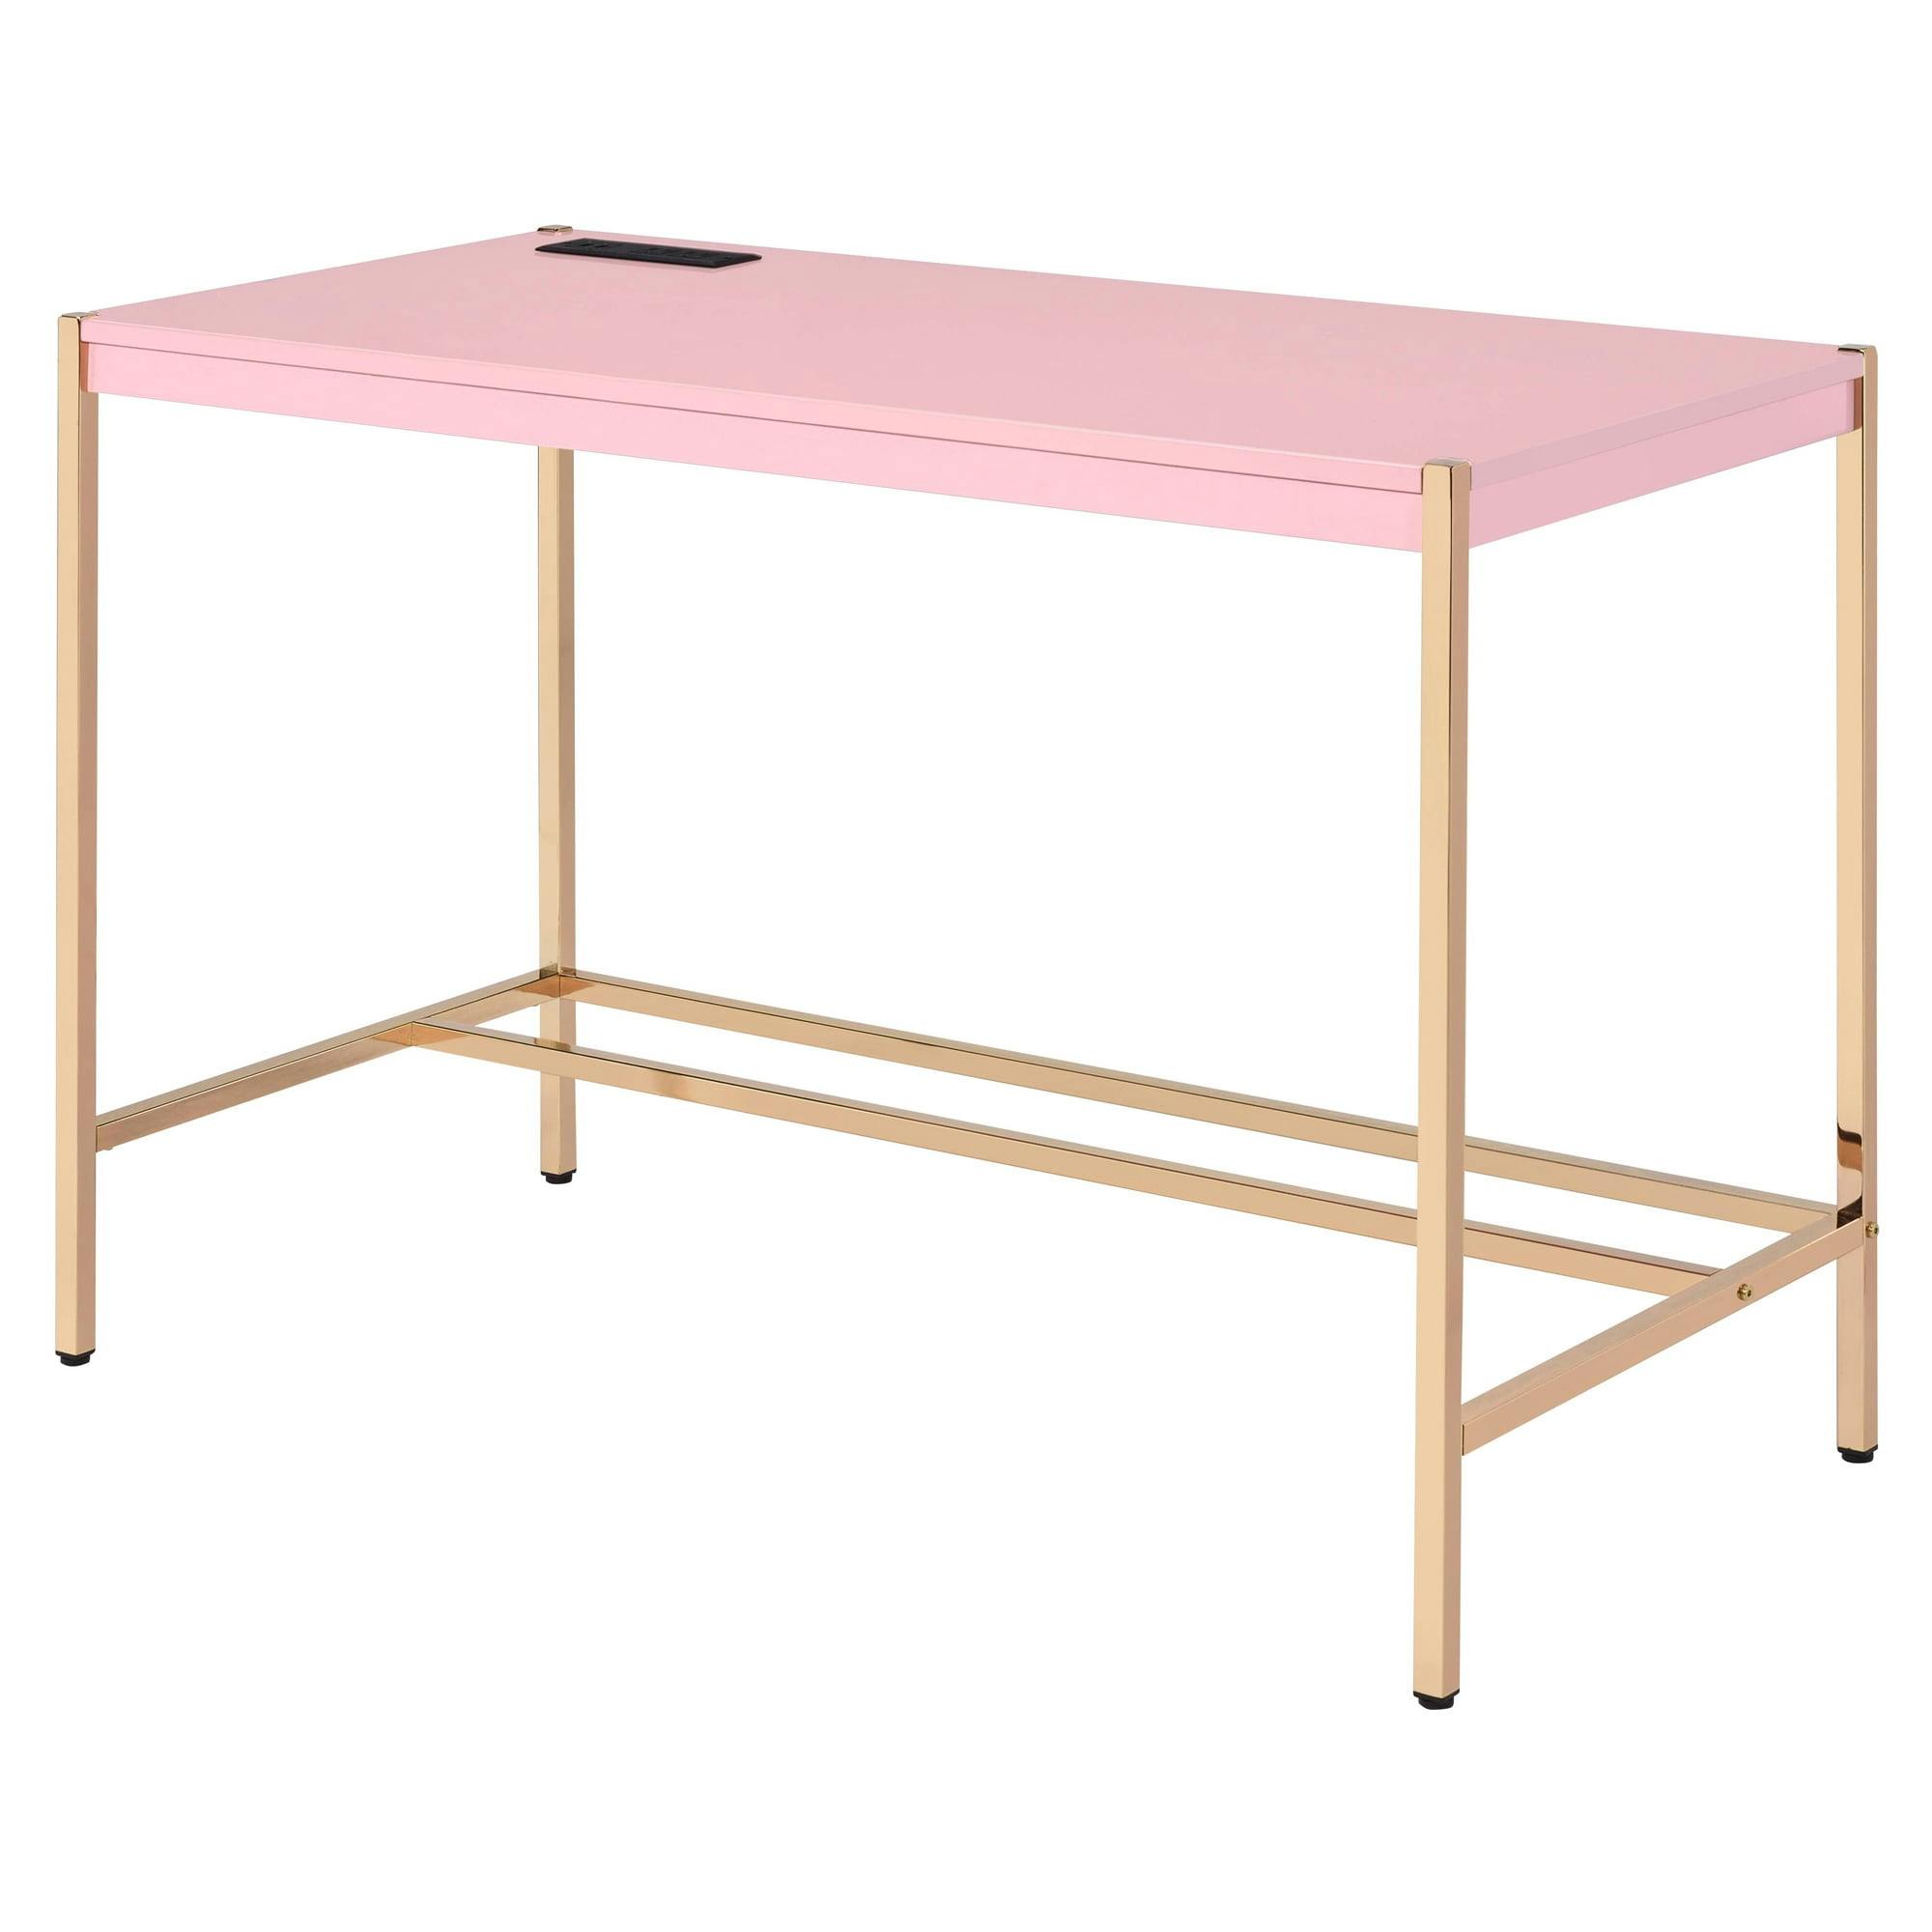 Elegant Minimalist Pink Vanity Desk with Gold Finish and USB Port